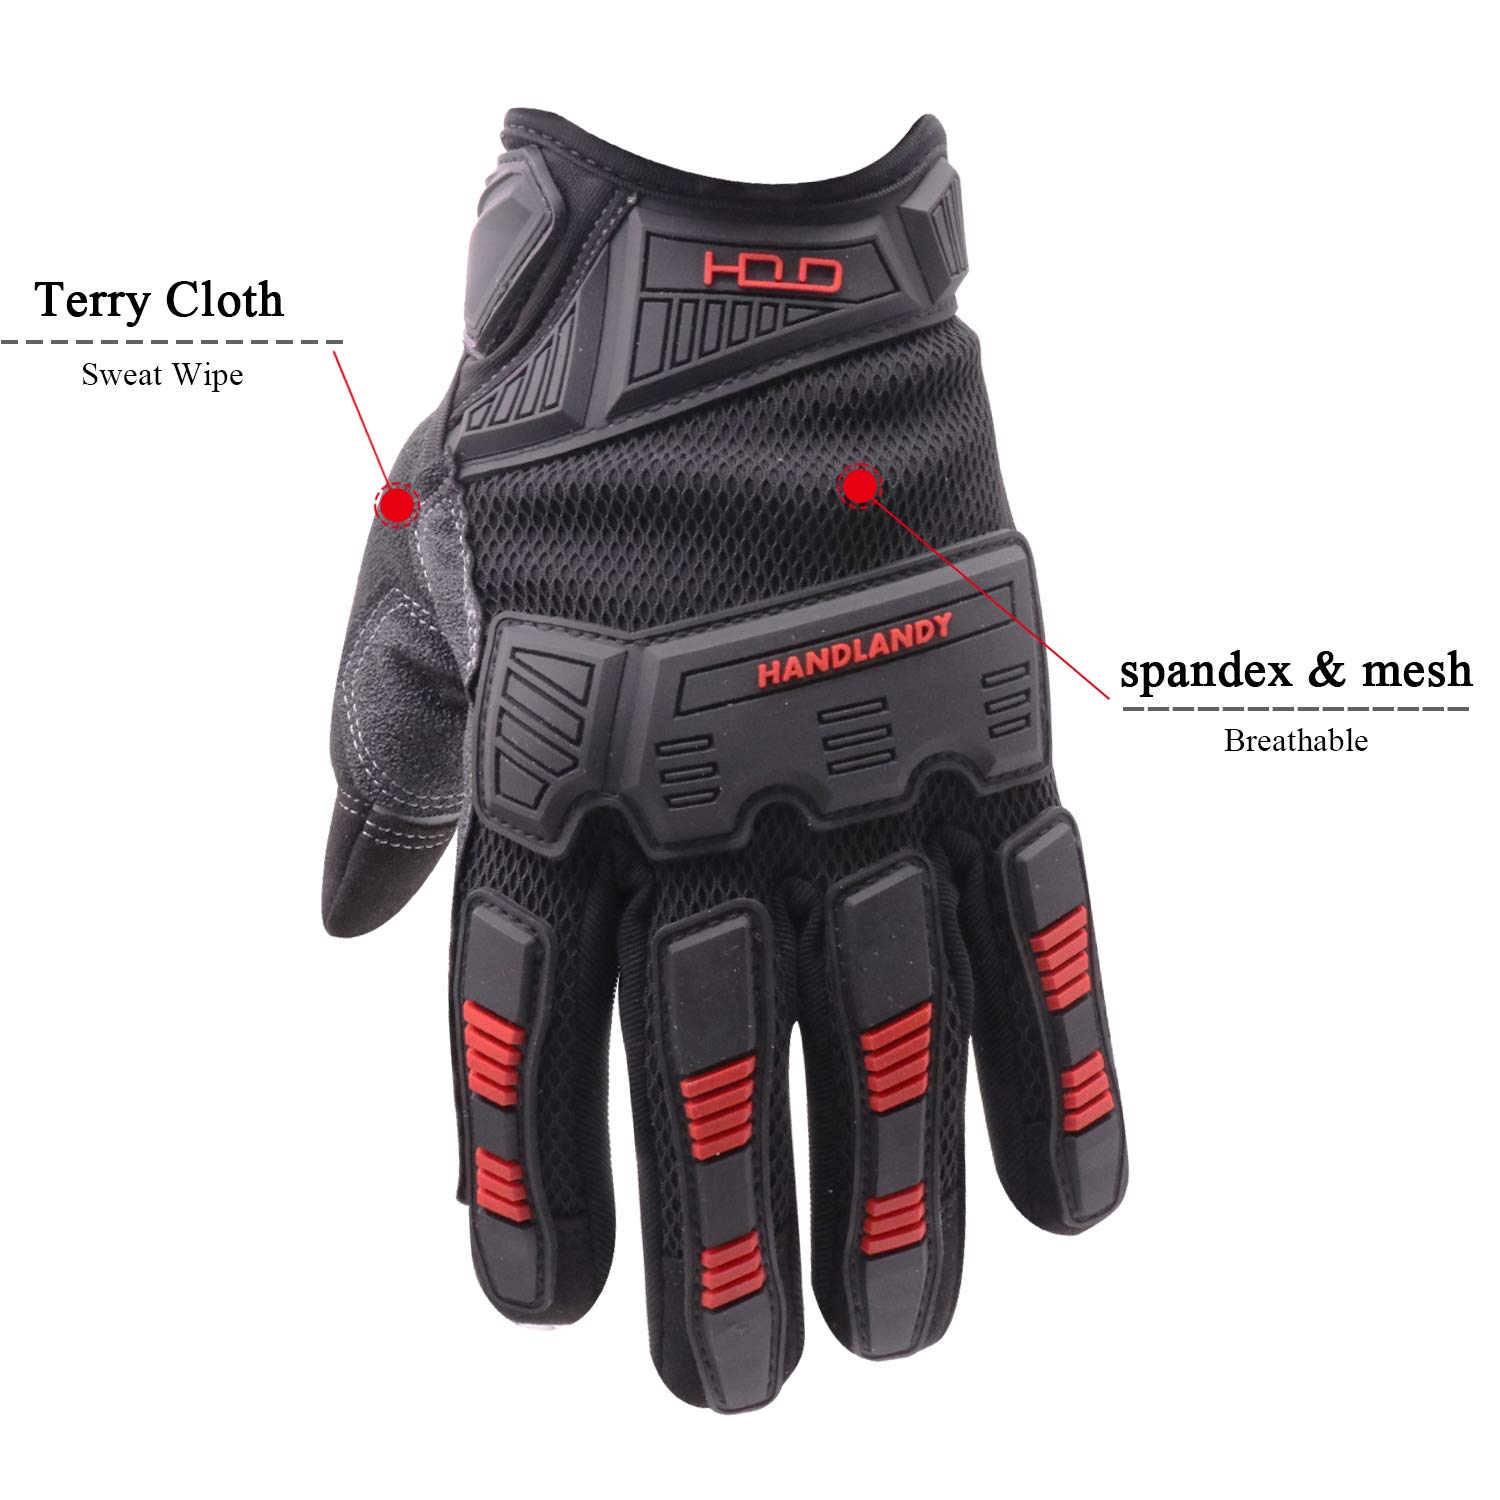 HANDLANDY Heavy Duty Work Gloves Men, Touchscreen TPR Impact Reducing Work Gloves, Non-Slip Breathable Mechanics Gloves (Large)